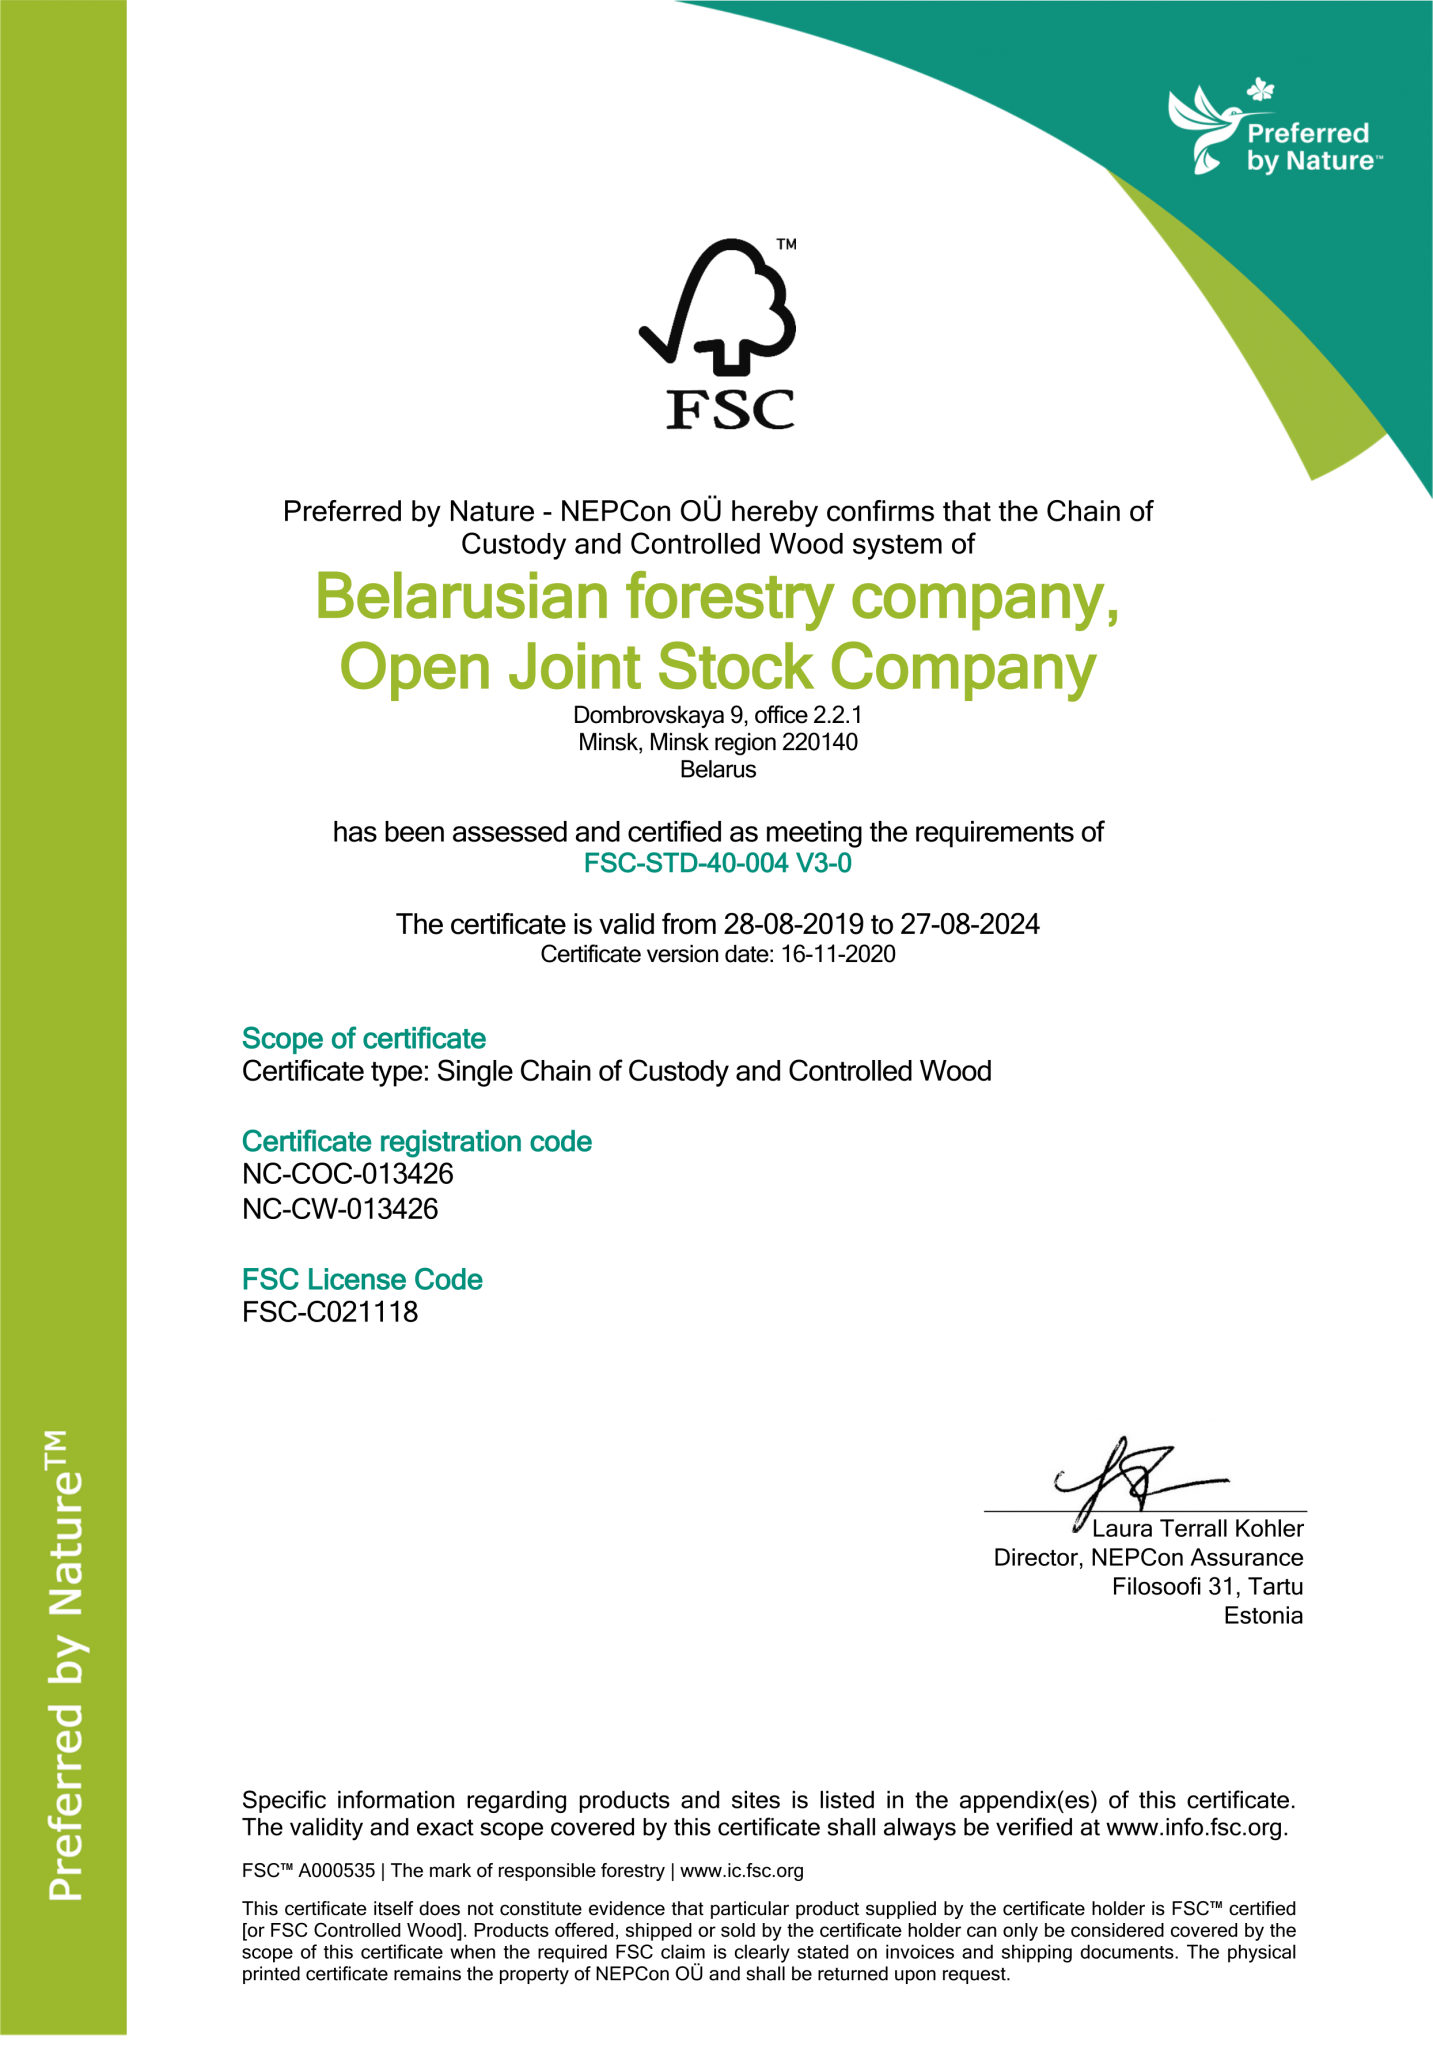 Belarusian forestry company, Open Joint Stock Company FSC COC w_CW Certificate 16.11.2020